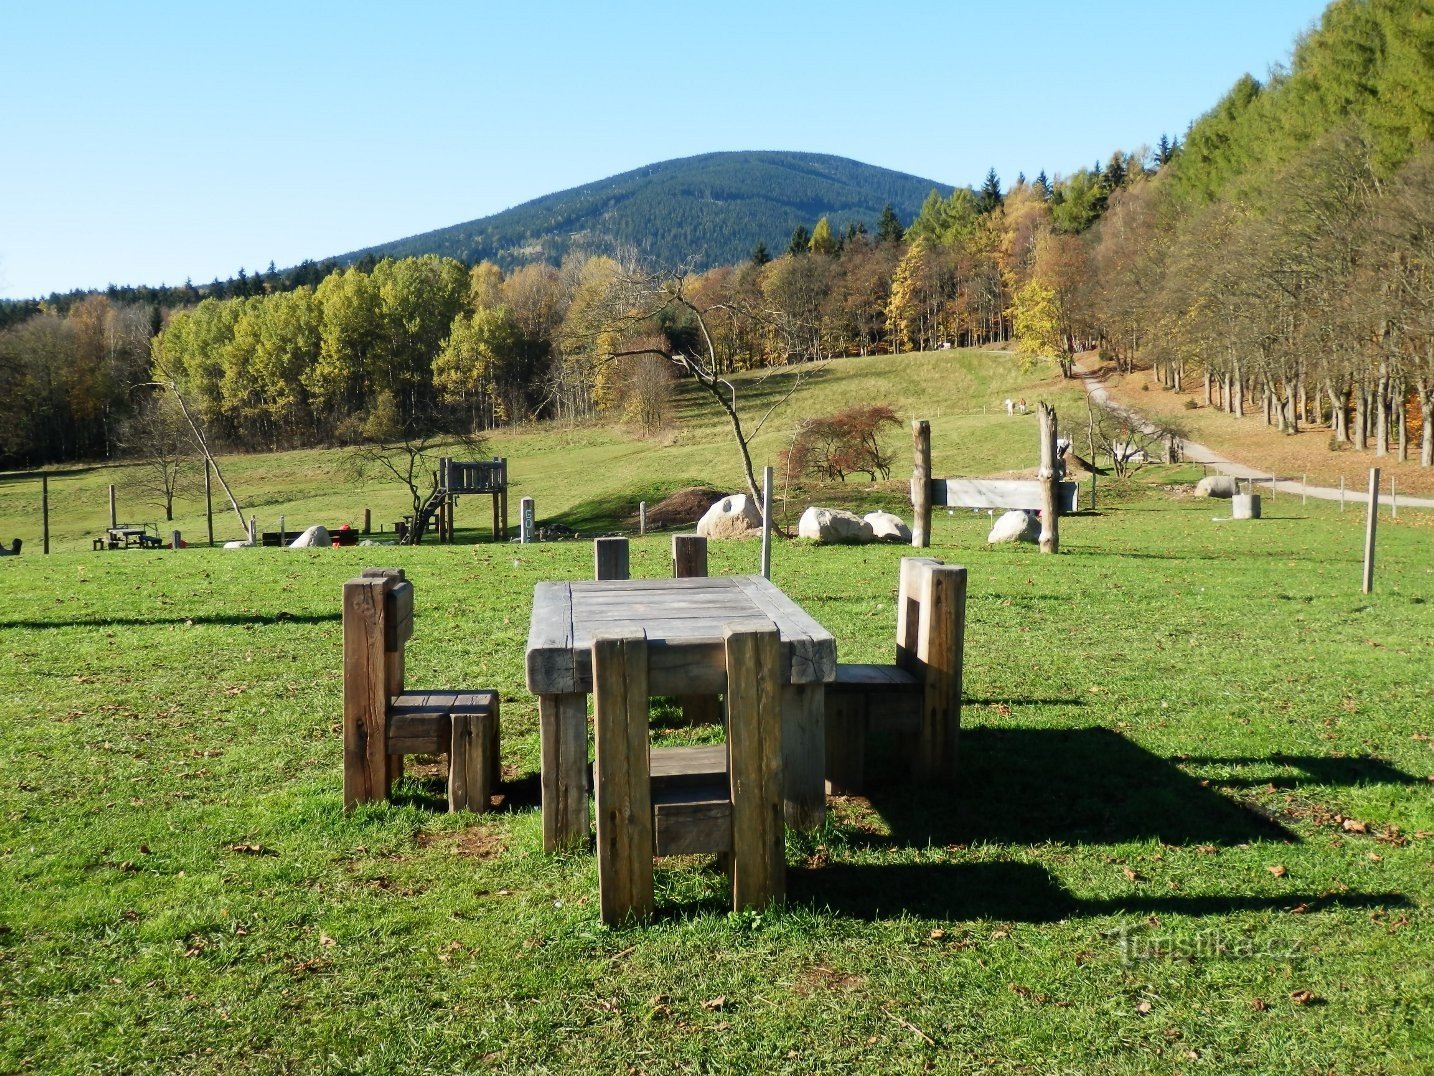 Part of the farm park, Černá hora in the back